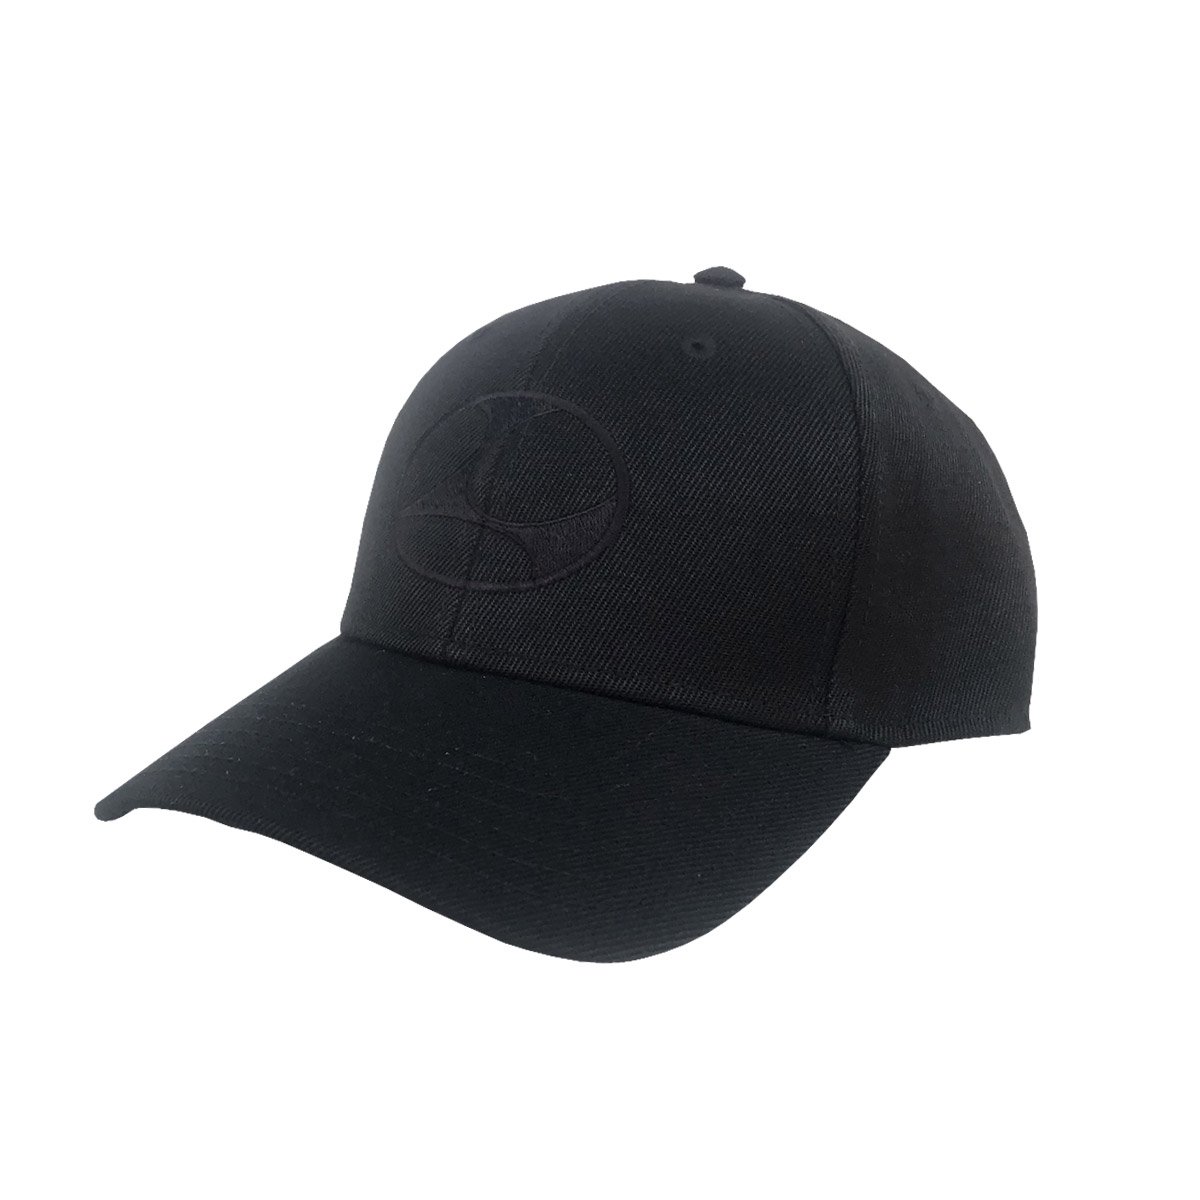 LIMOSINE(リムジン) |LIMOSINE - LIMO LOGO 6PANEL HAT (Black)